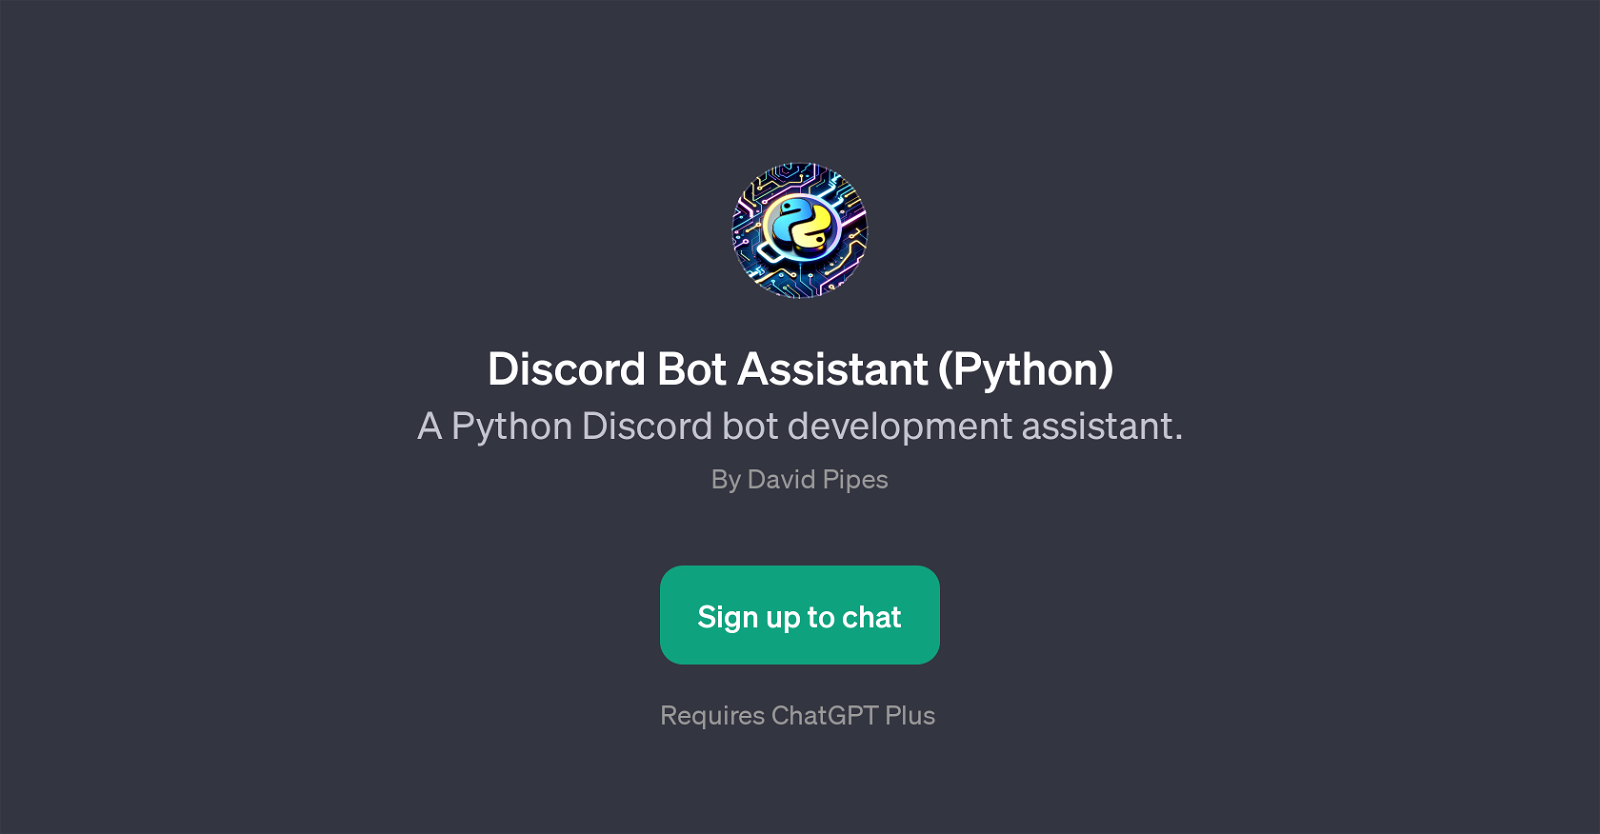 Discord Bot Assistant (Python) website